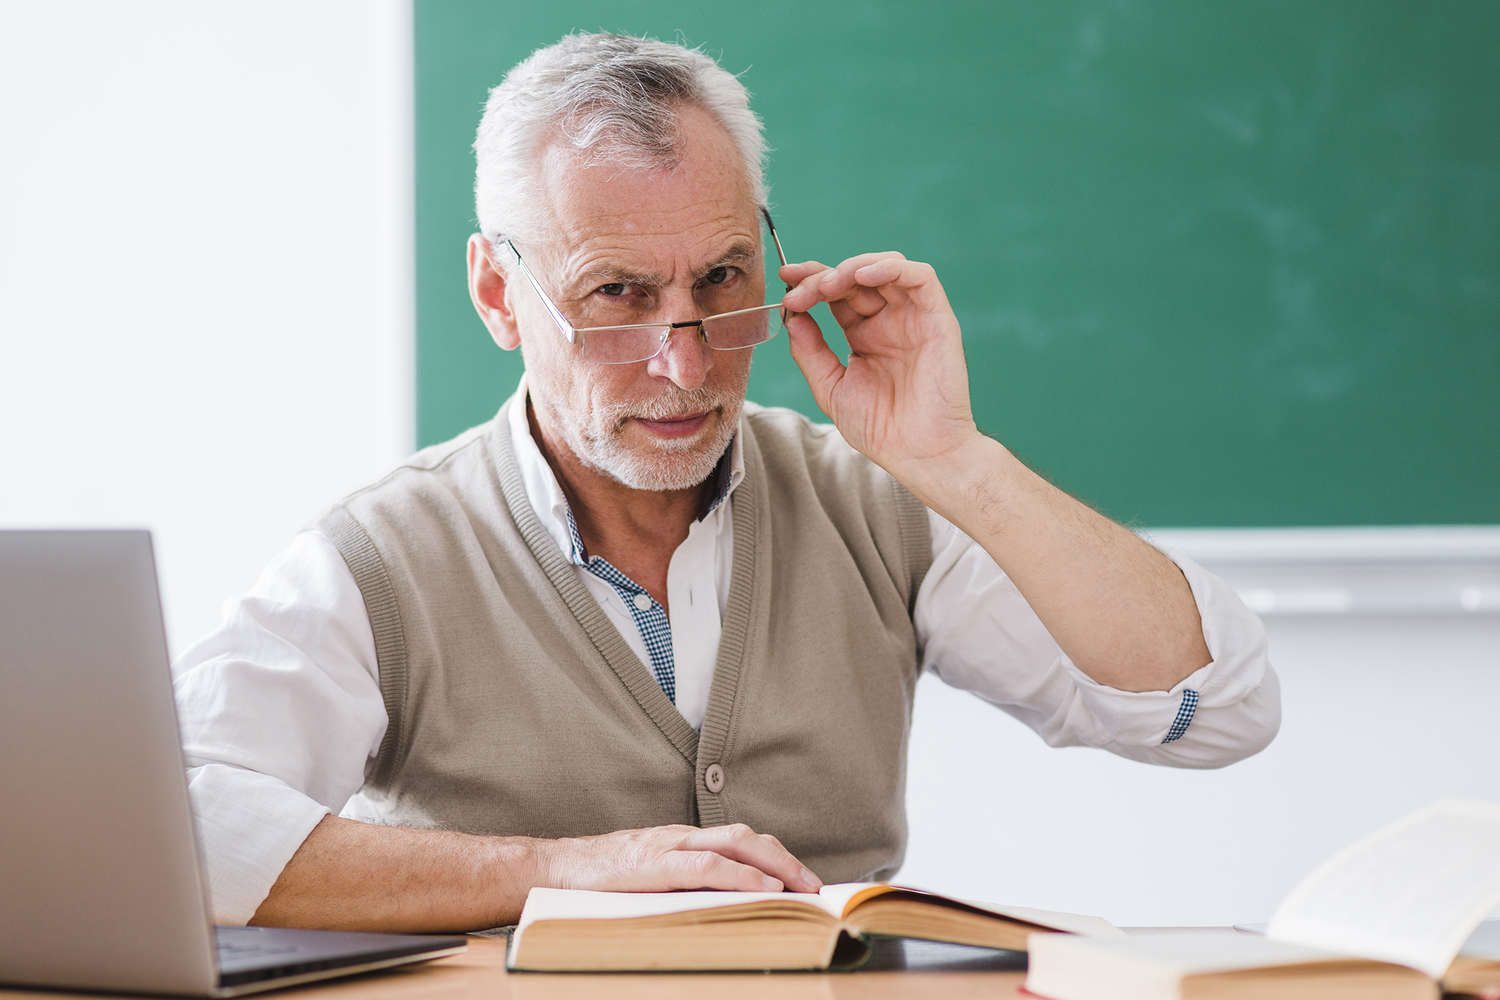 Experienced teachers. Профессор в очках. Профессор. Профессор поправляет очки. Фото учителя мужчины.